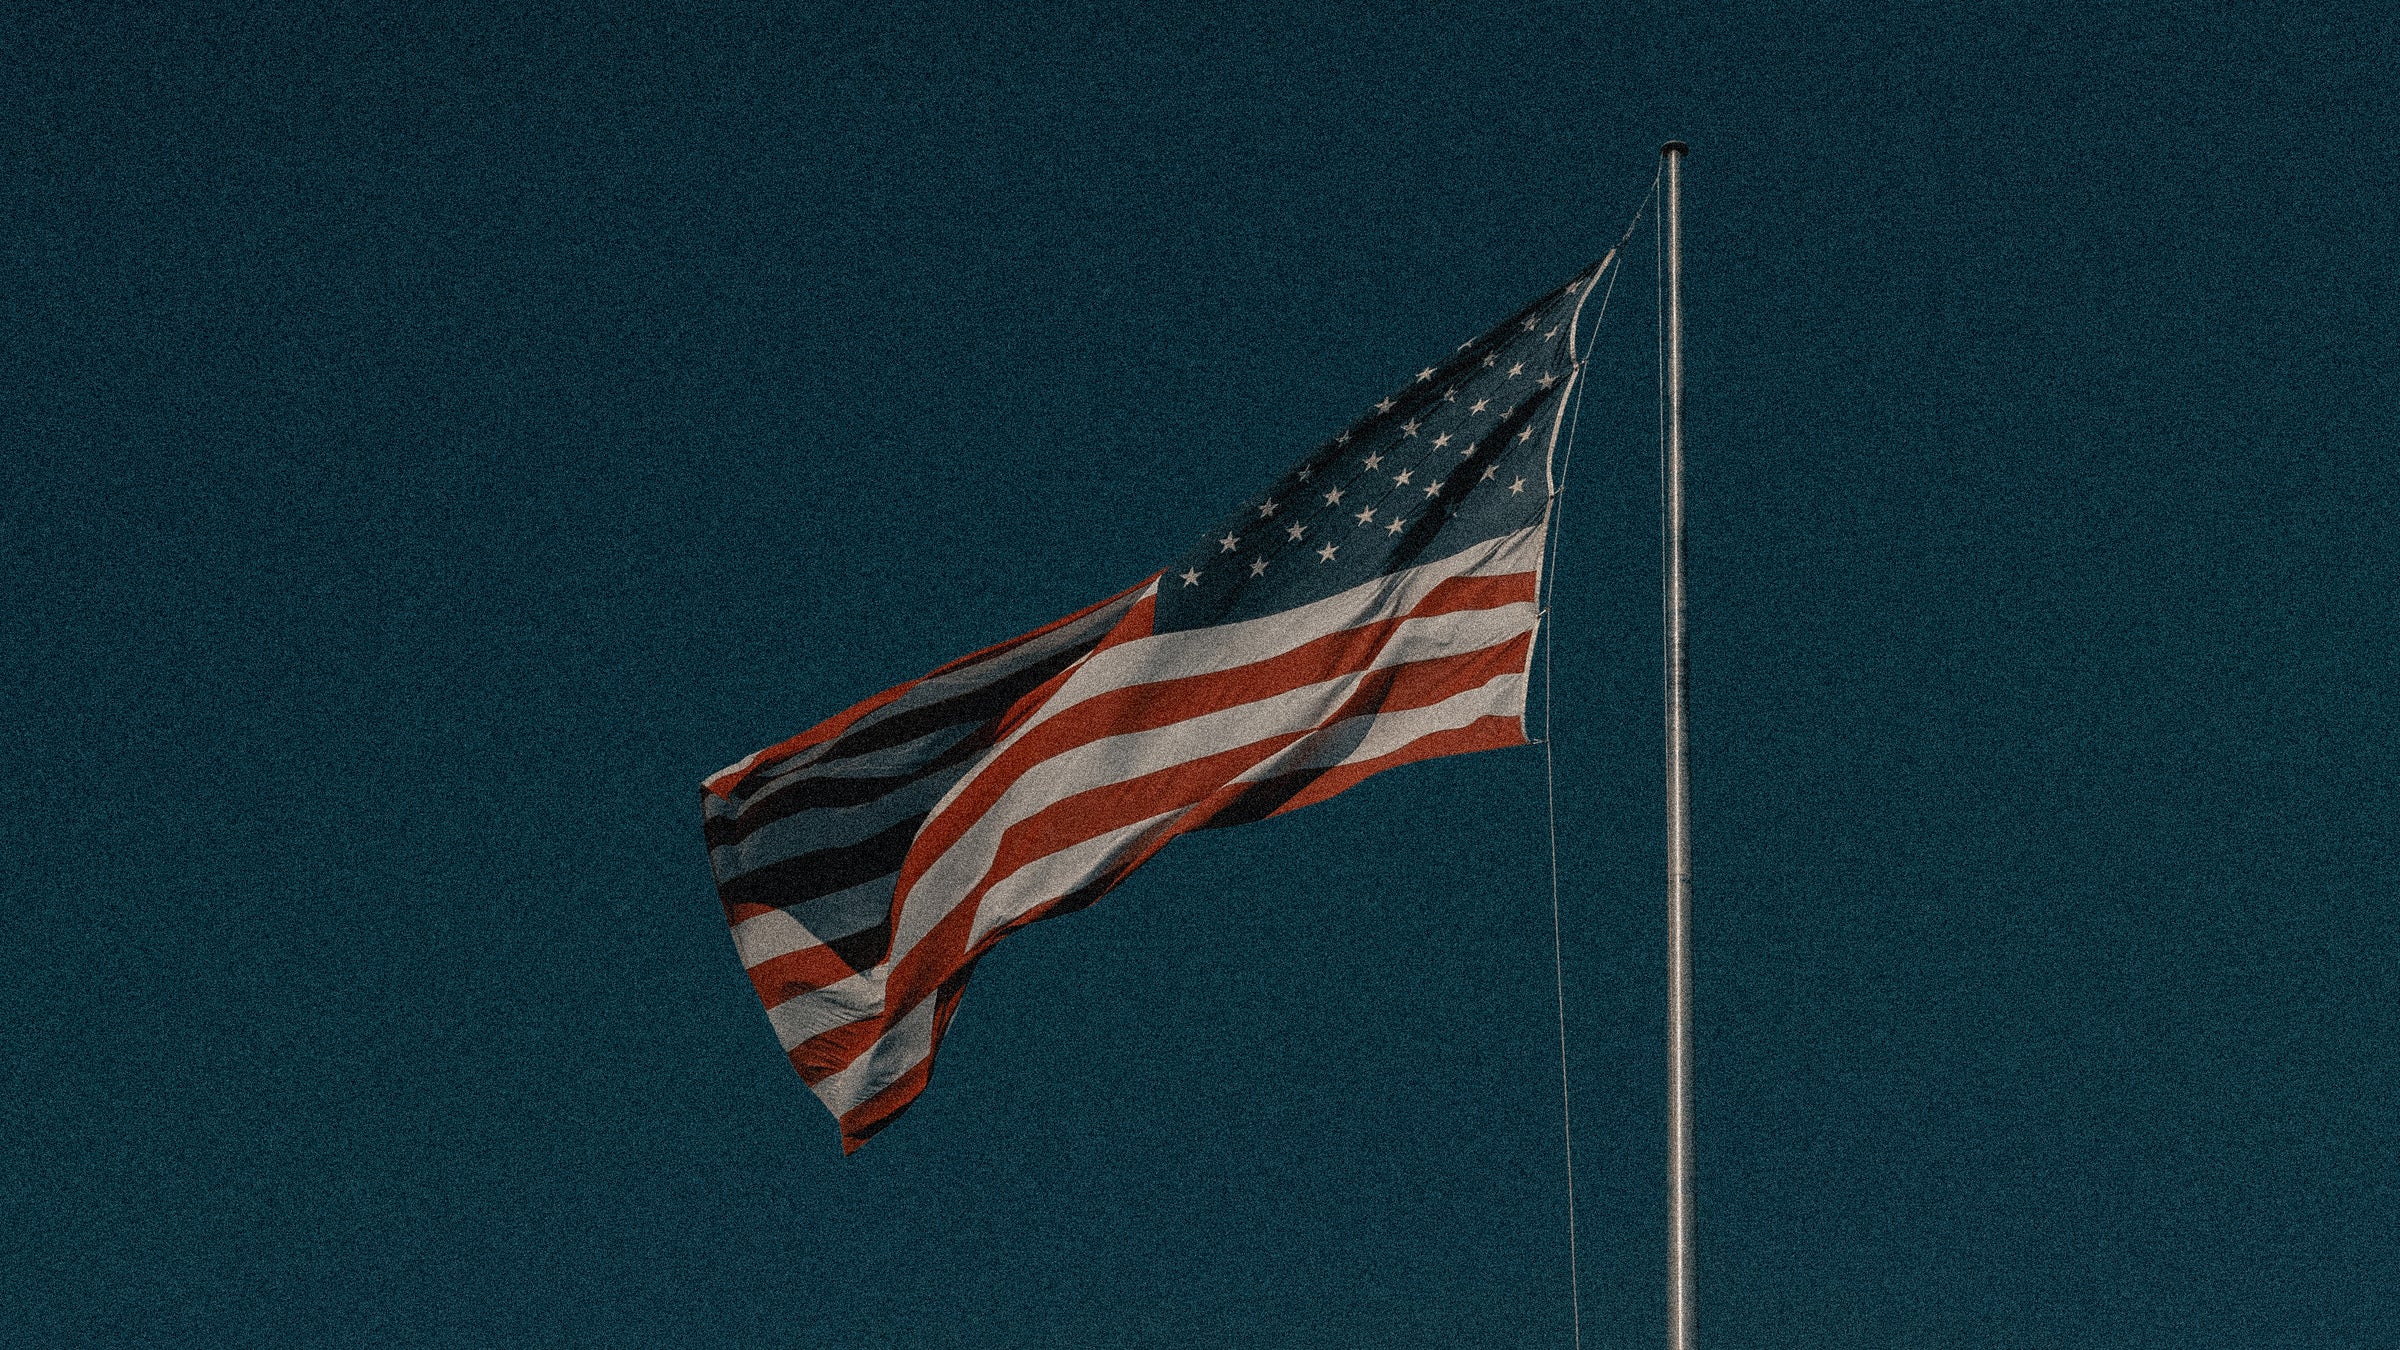 American flag flying